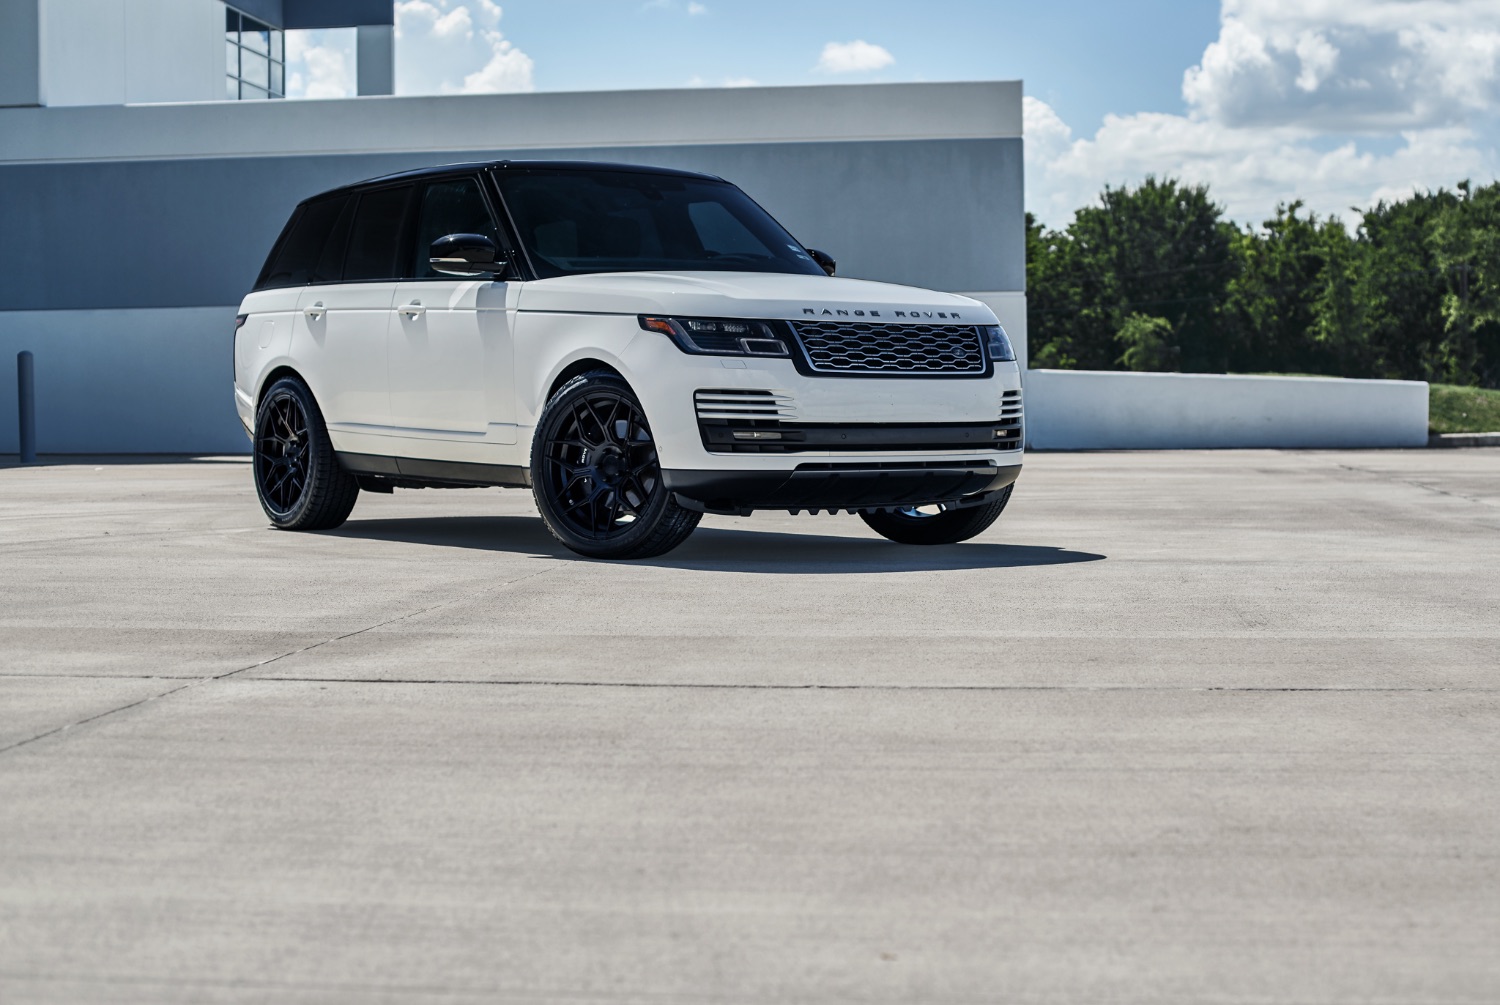 Range Rover Sport Matte Black  - Cars Of The Week For June 6, 2020;